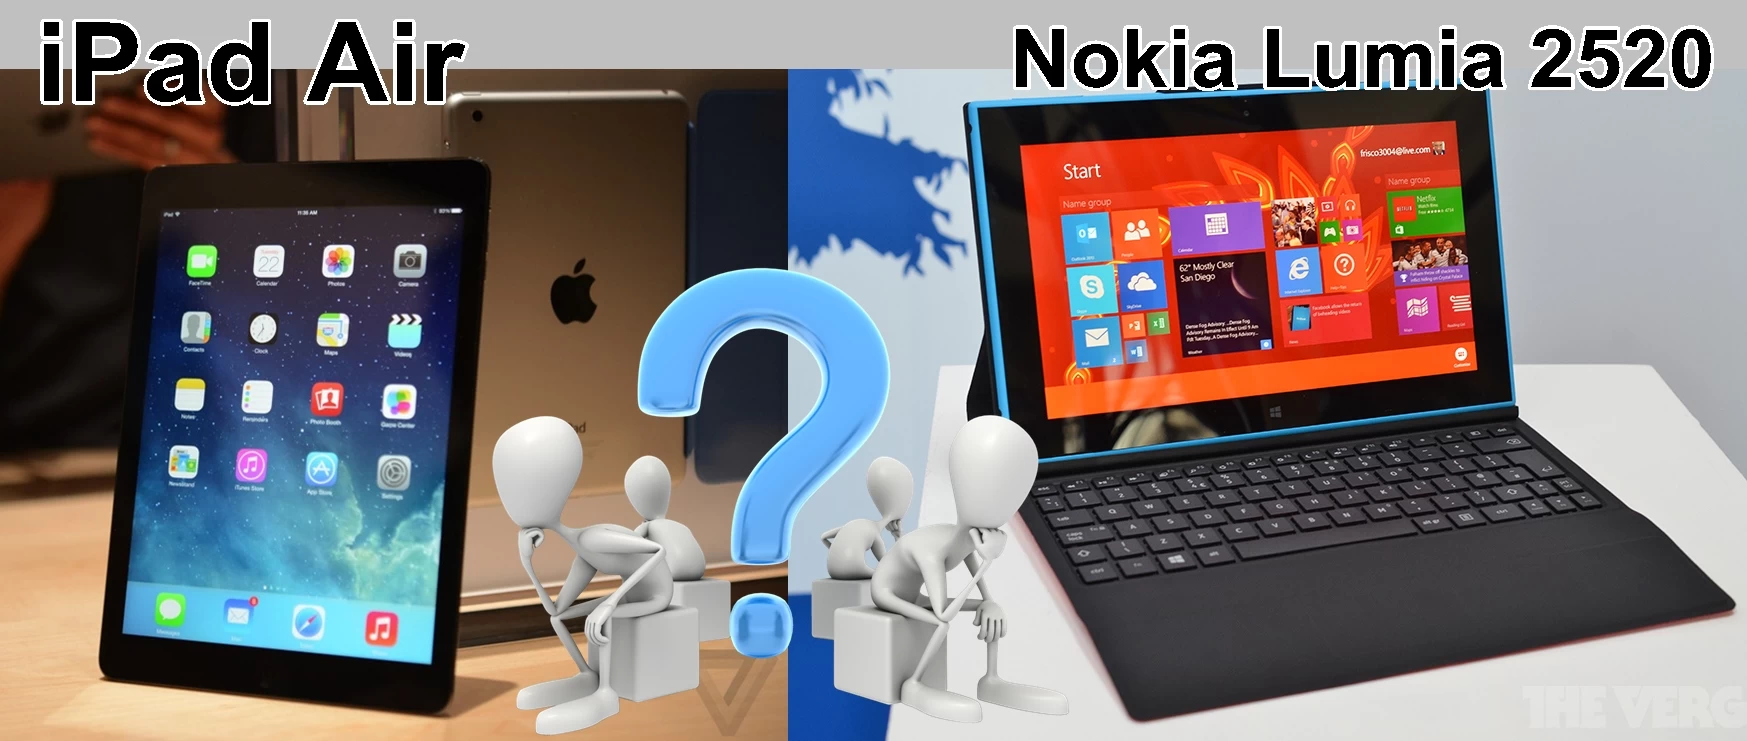 lumia252018 1020 verge super wide1 | Nokia Lumia 2520 | <!--:TH--></noscript>เปรียบเทียบ iPad Air และ Nokia Lumia 2520 รูปร่าง สเปค และการใช้งาน ตัวไหนเหมาะกับเรามากกว่า ?